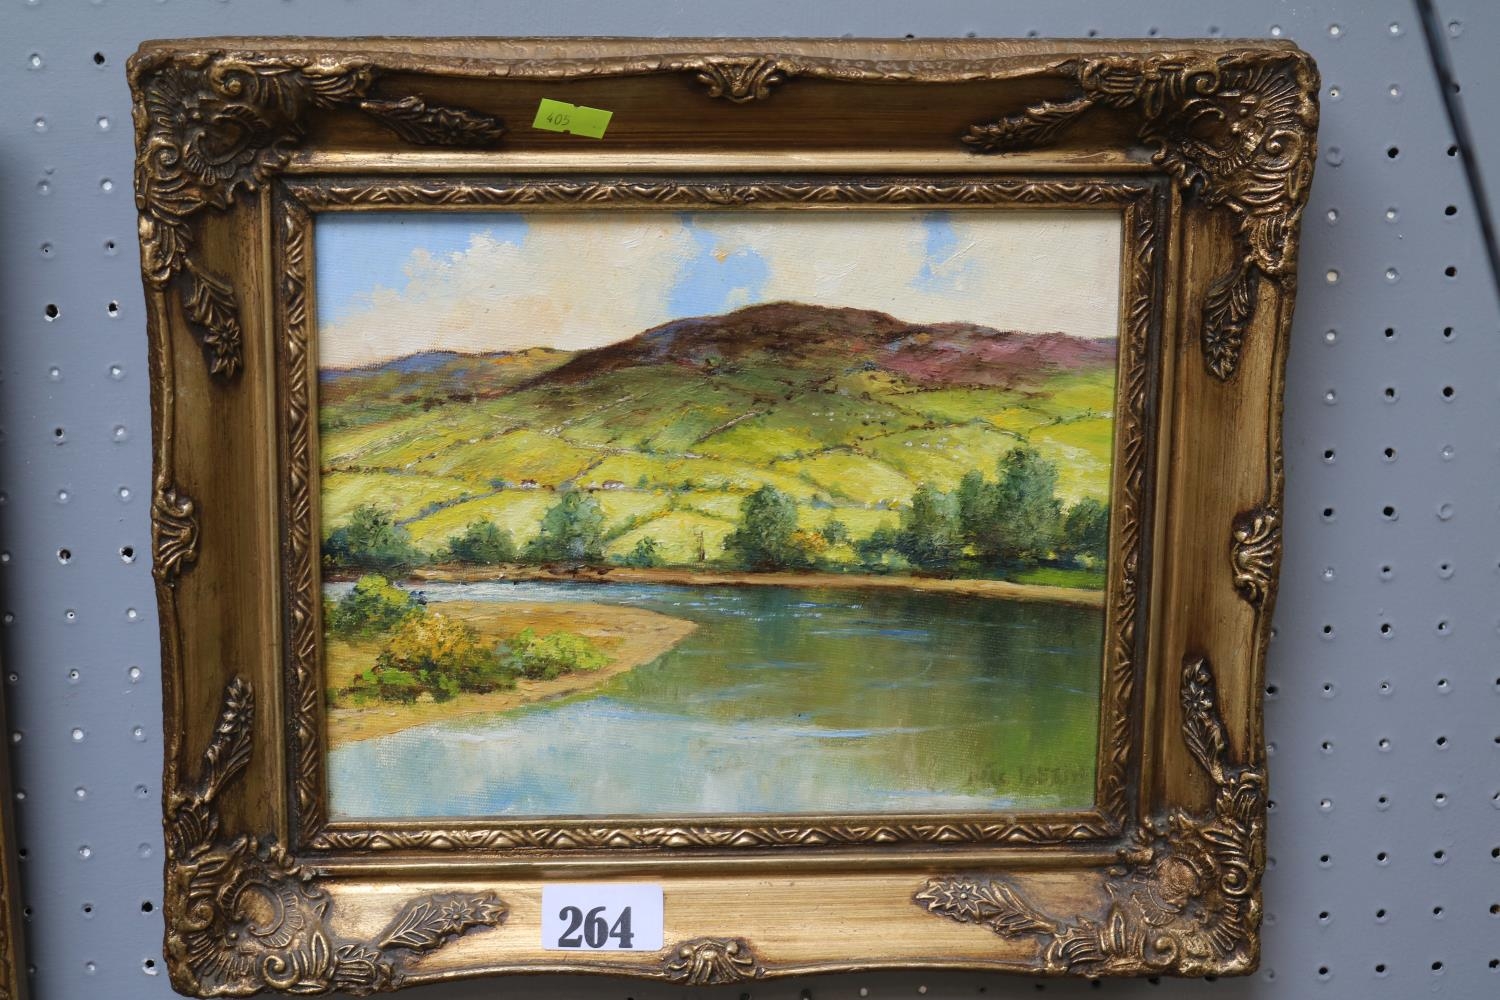 Framed Oil on board depicting a Lakeland scene signed to bottom right